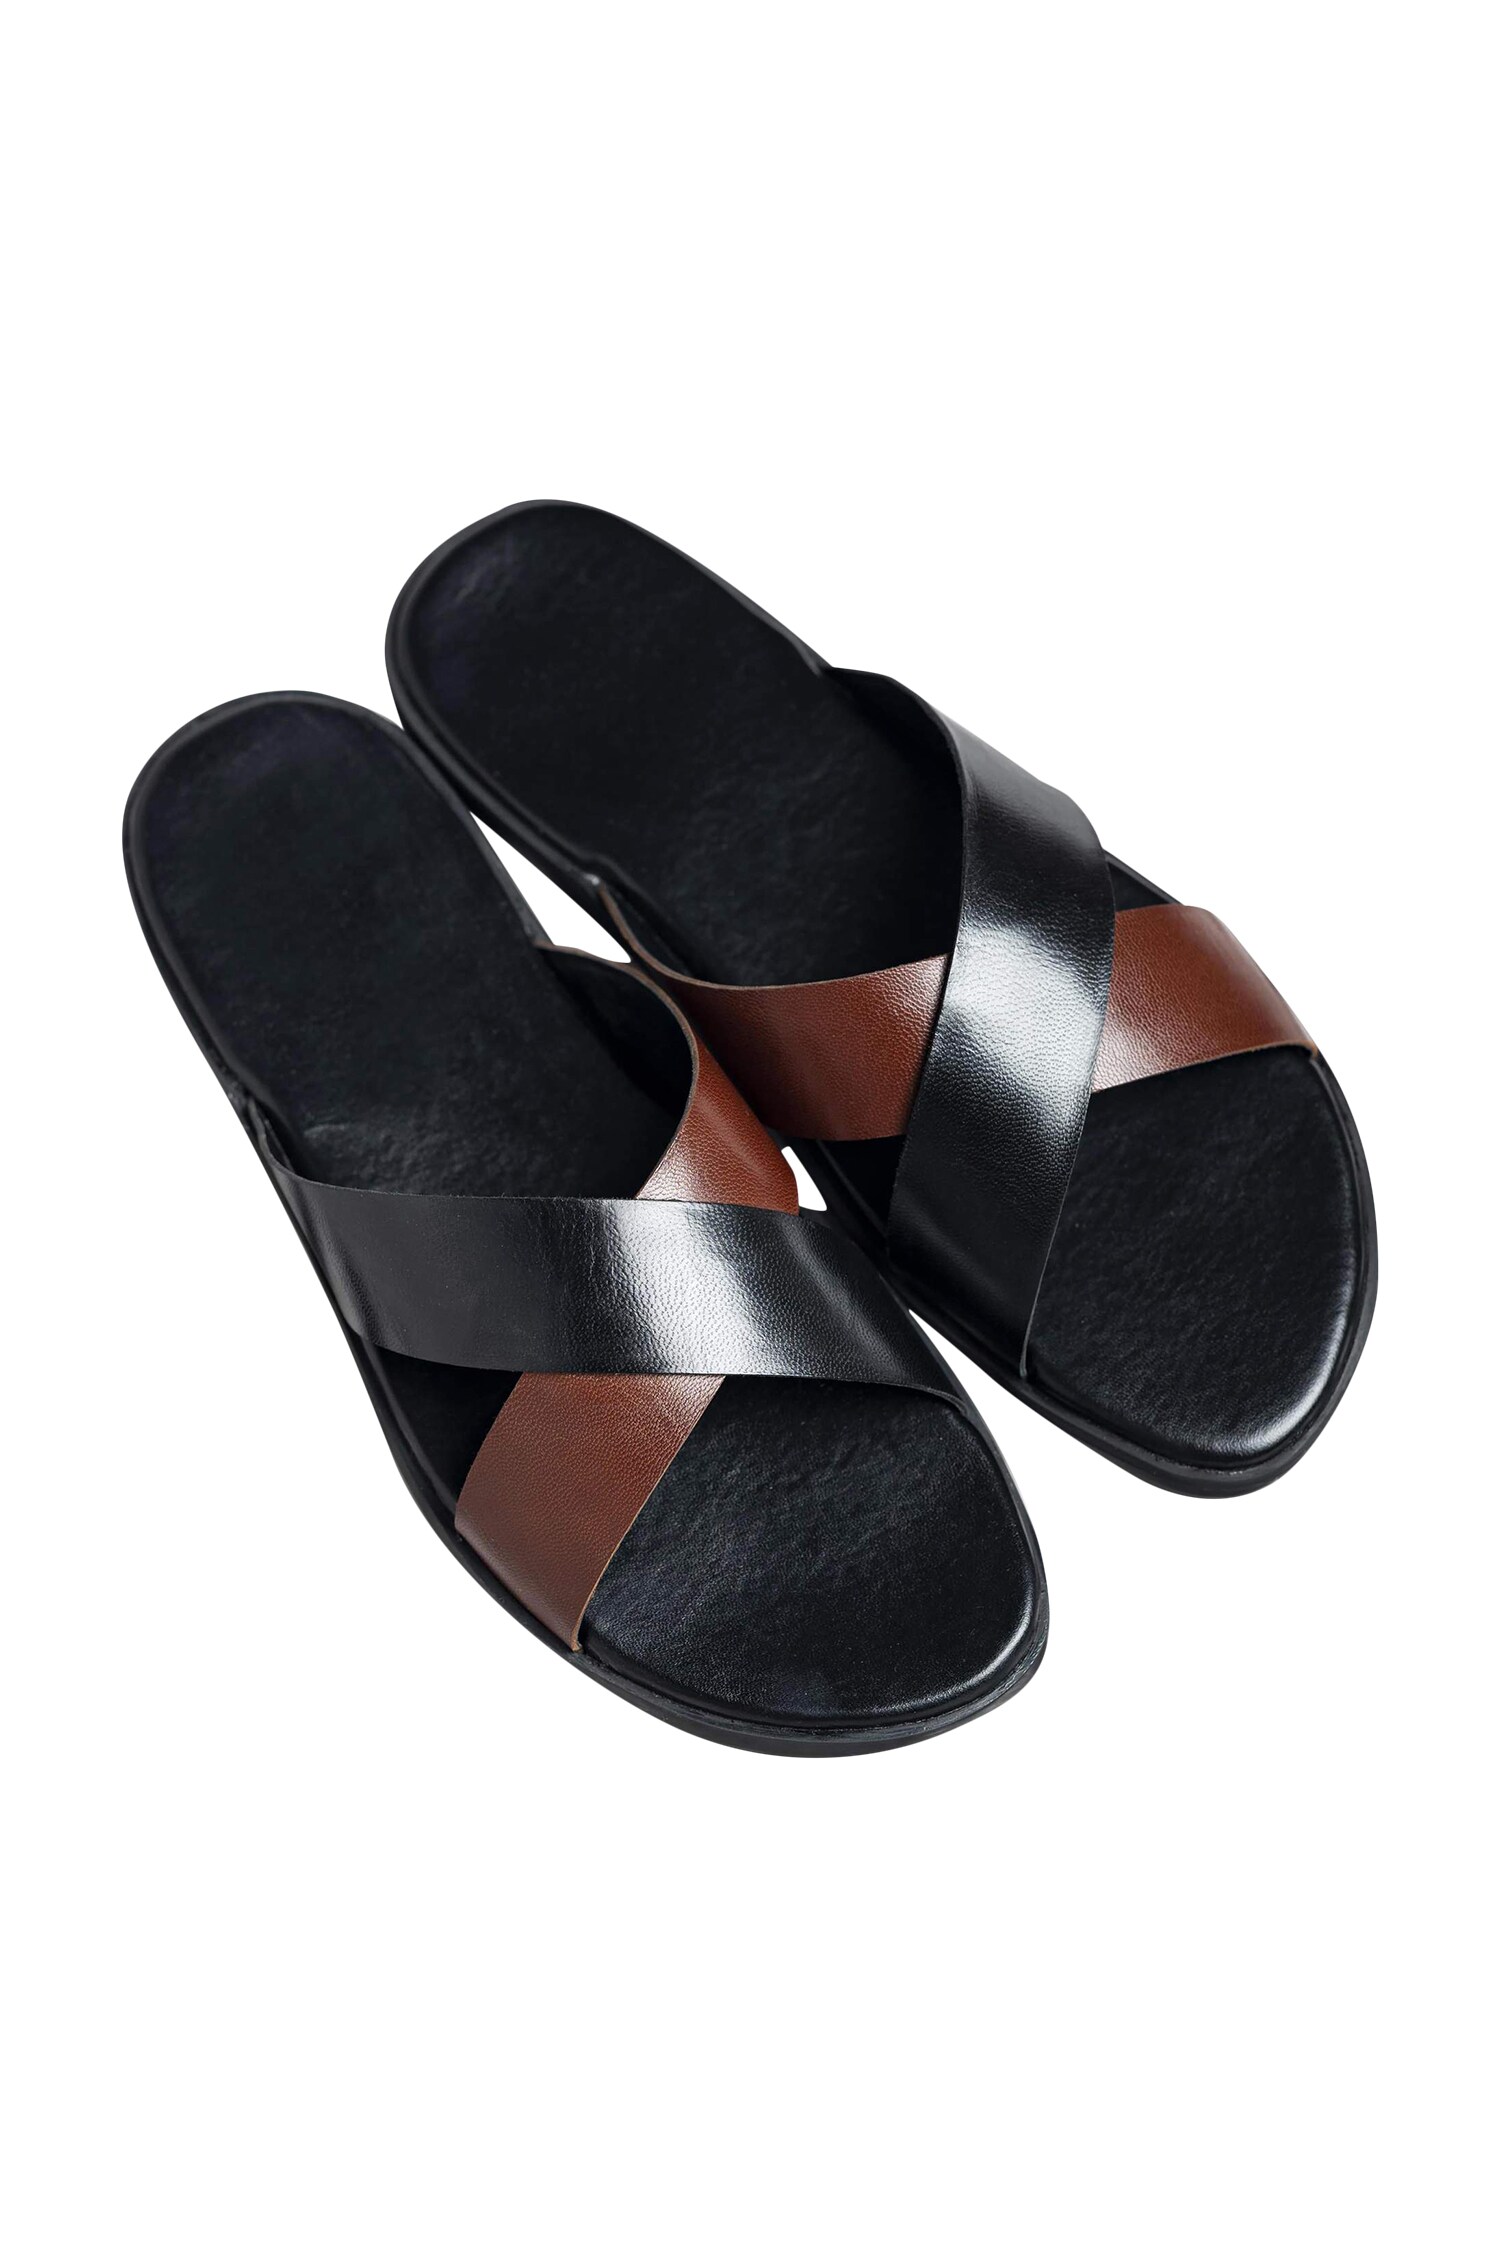 Dmodot Black Leather Cross Strap Sandals